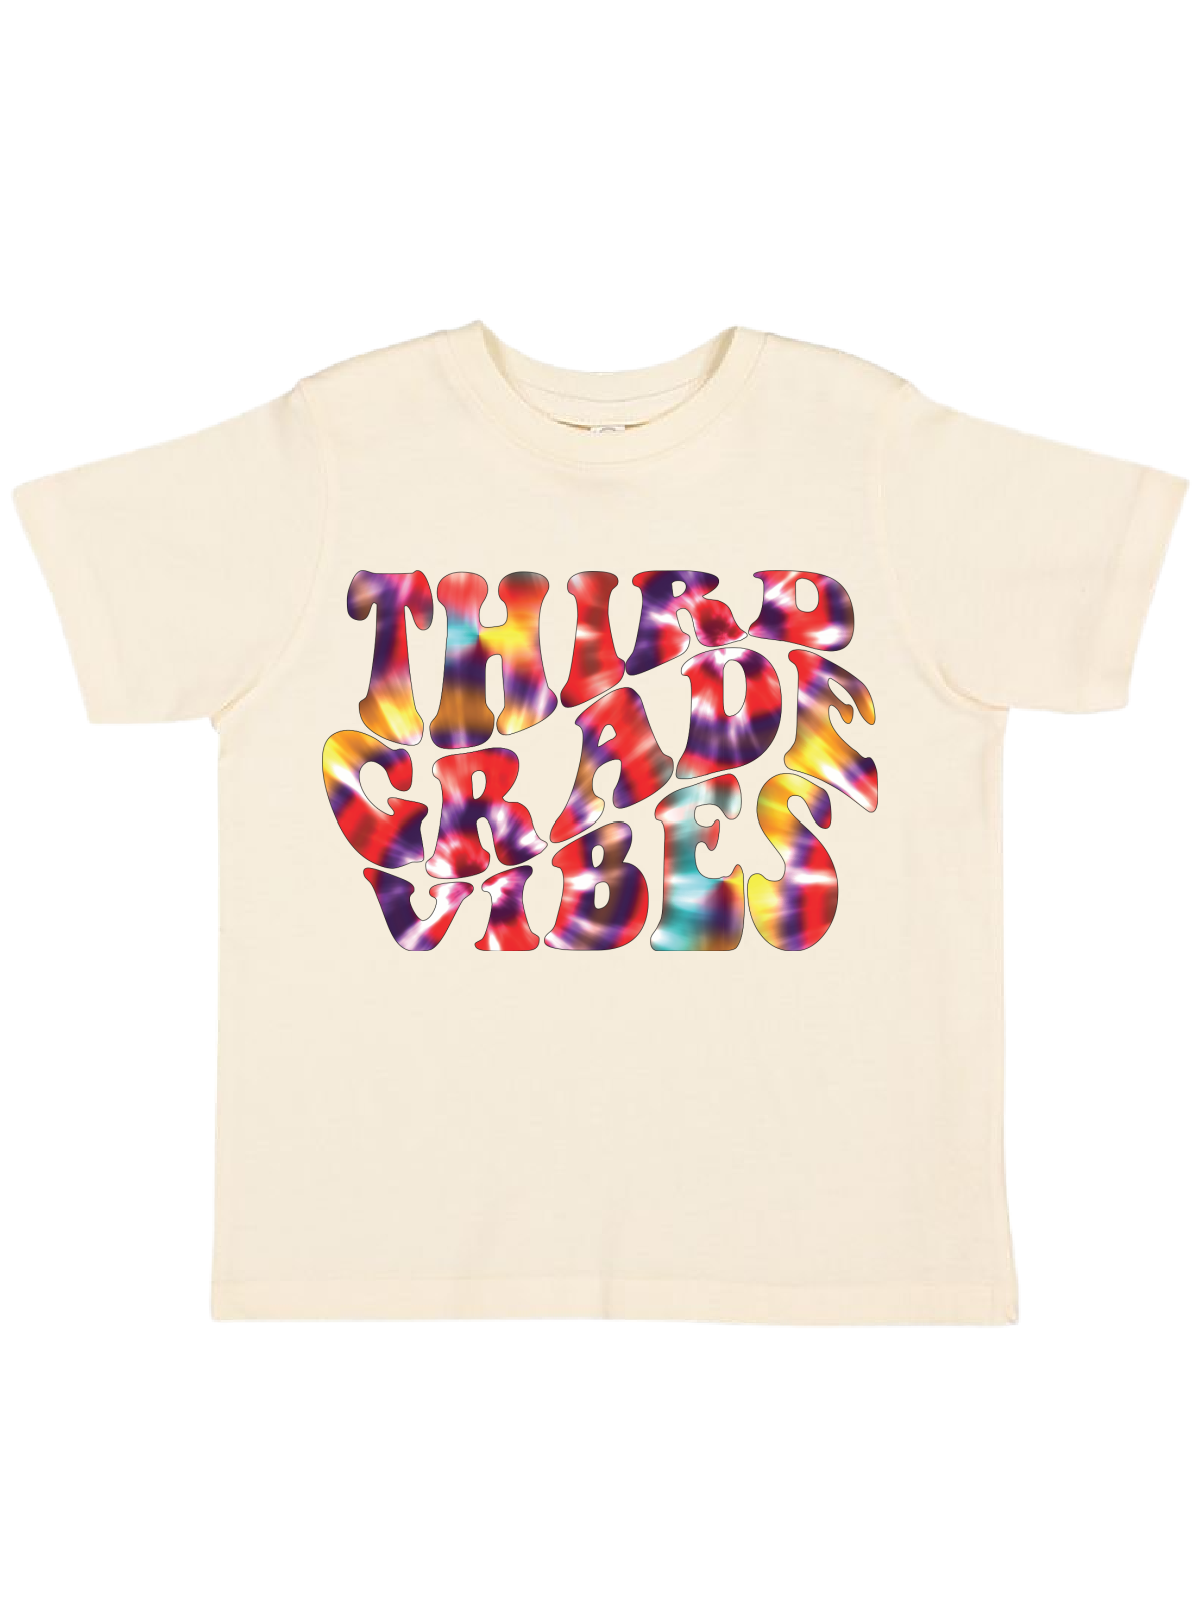 Third Grade Vibes Kids Tye Dye Back to School Shirt in Natural Tan